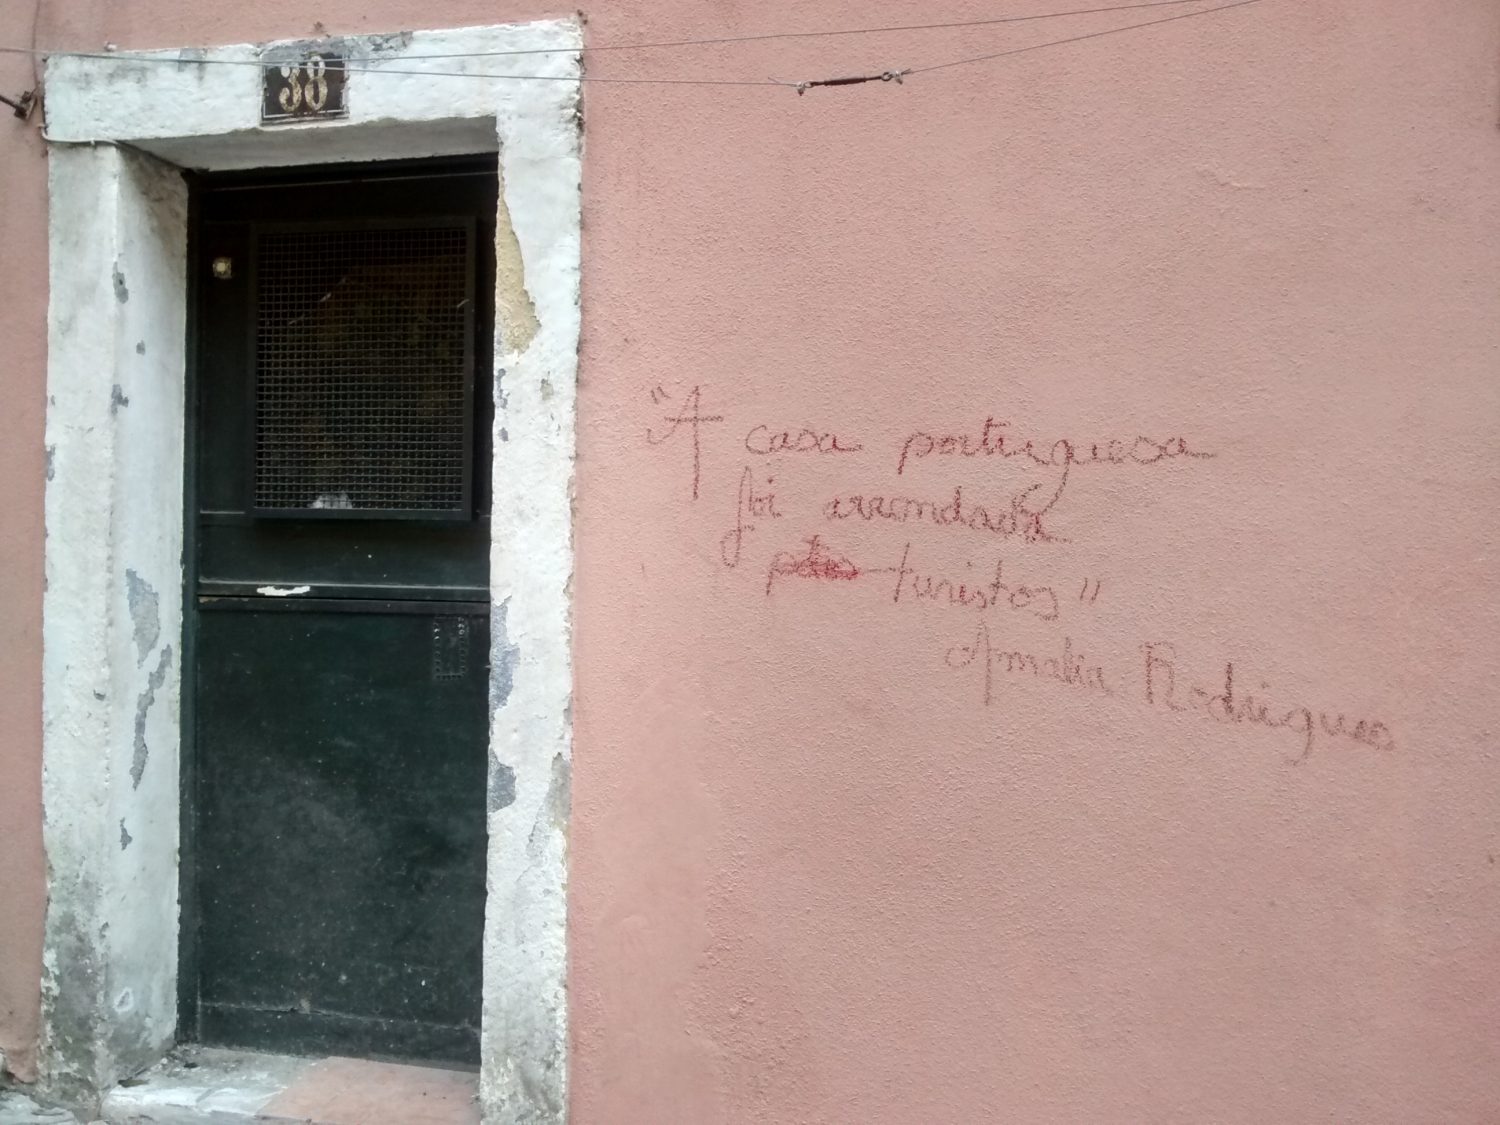 Nas paredes da Alfama, protesto: "A casa portuguesa foi arrendada por turistas". Assinado: Amália Rodrigues (Foto Lauro Neto)